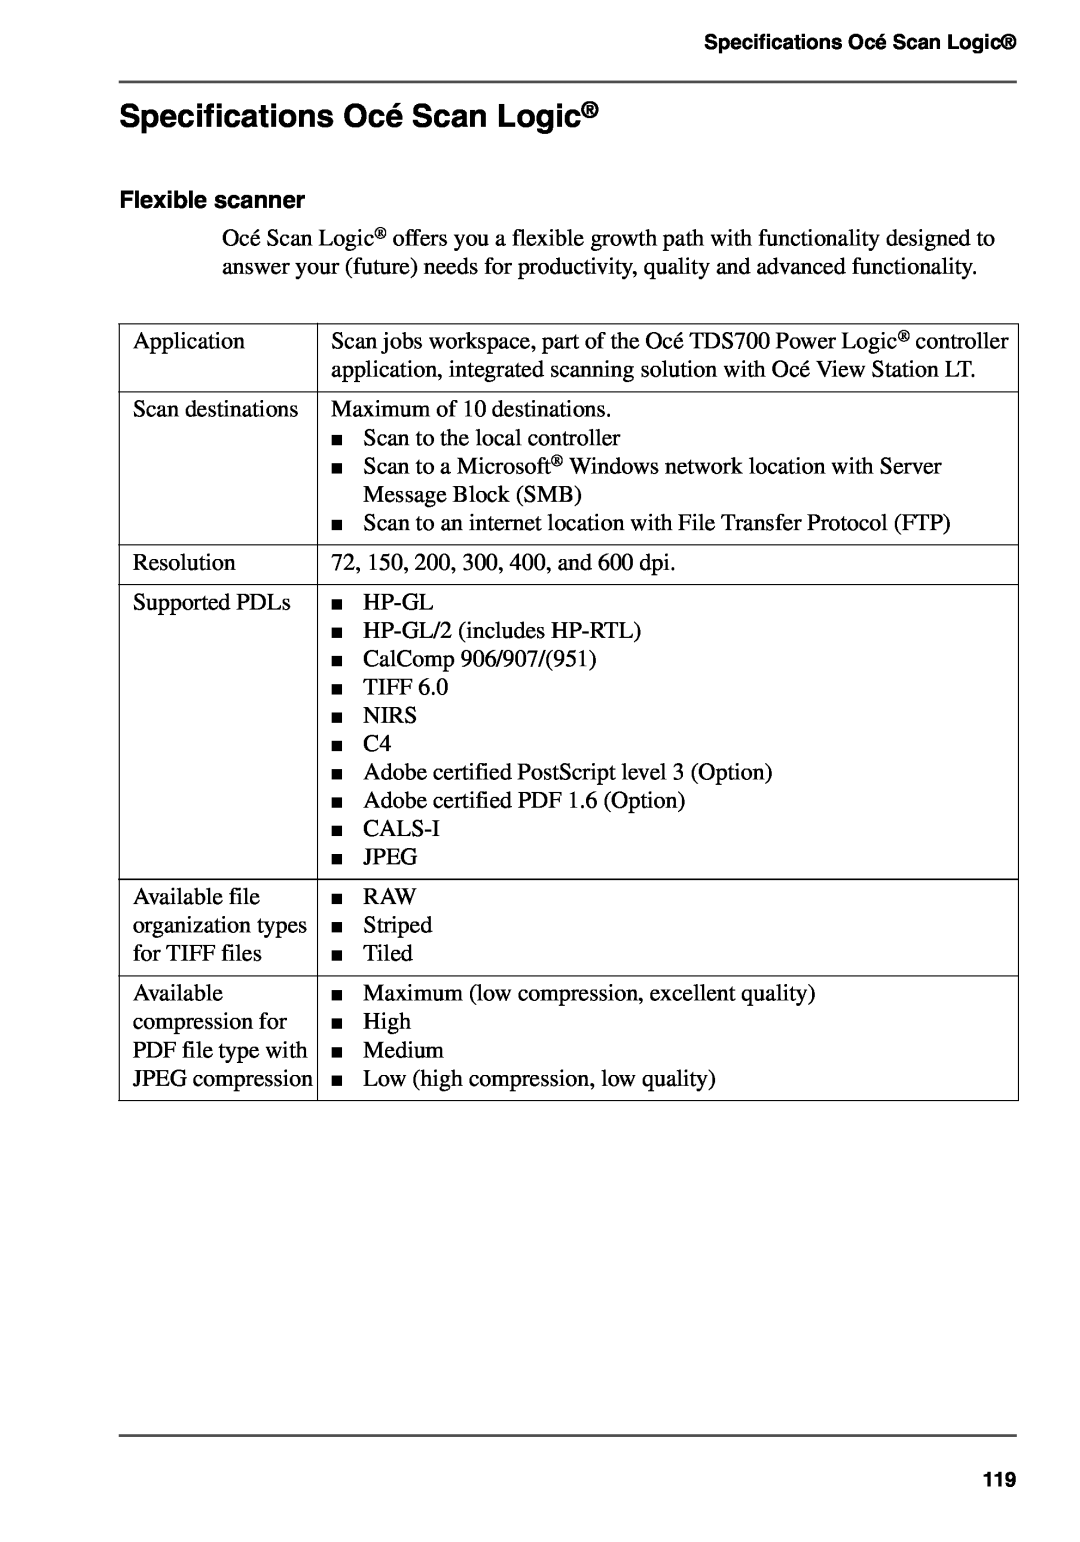 Oce North America TDS700 user manual Specifications Océ Scan Logic, Flexible scanner 